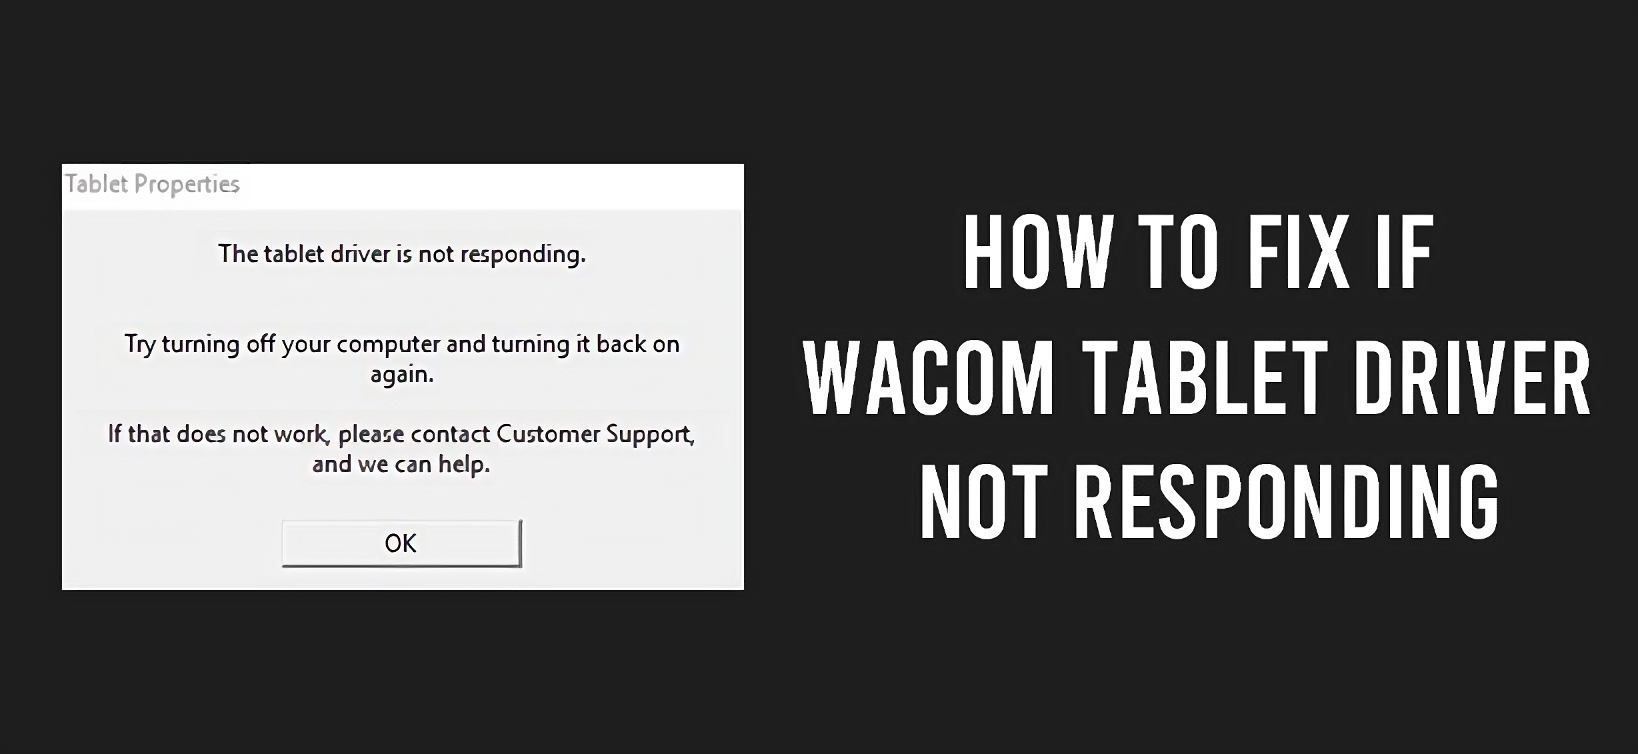 How To Fix Wacom Tablet Driver Not Responding